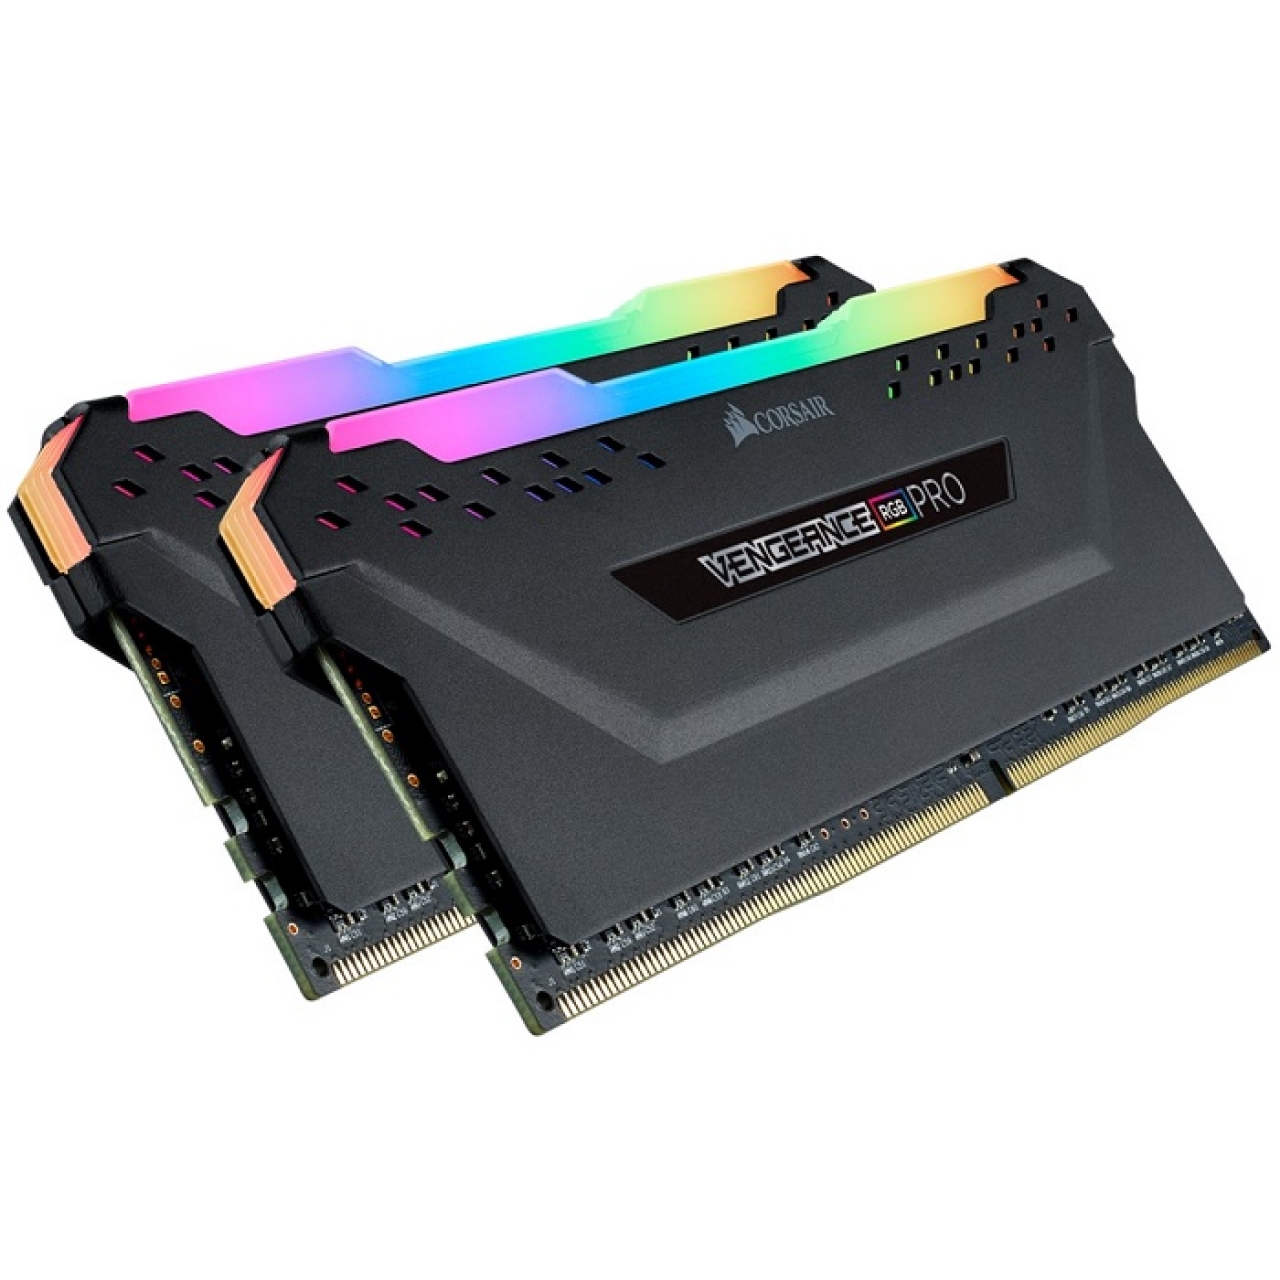 CORSAIR 16GB (2X 8GB) DDR4 3600MHZ CL18 DUAL KIT RGB PC RAM VENGEANCE RGB PRO CMW16GX4M2D3600C18